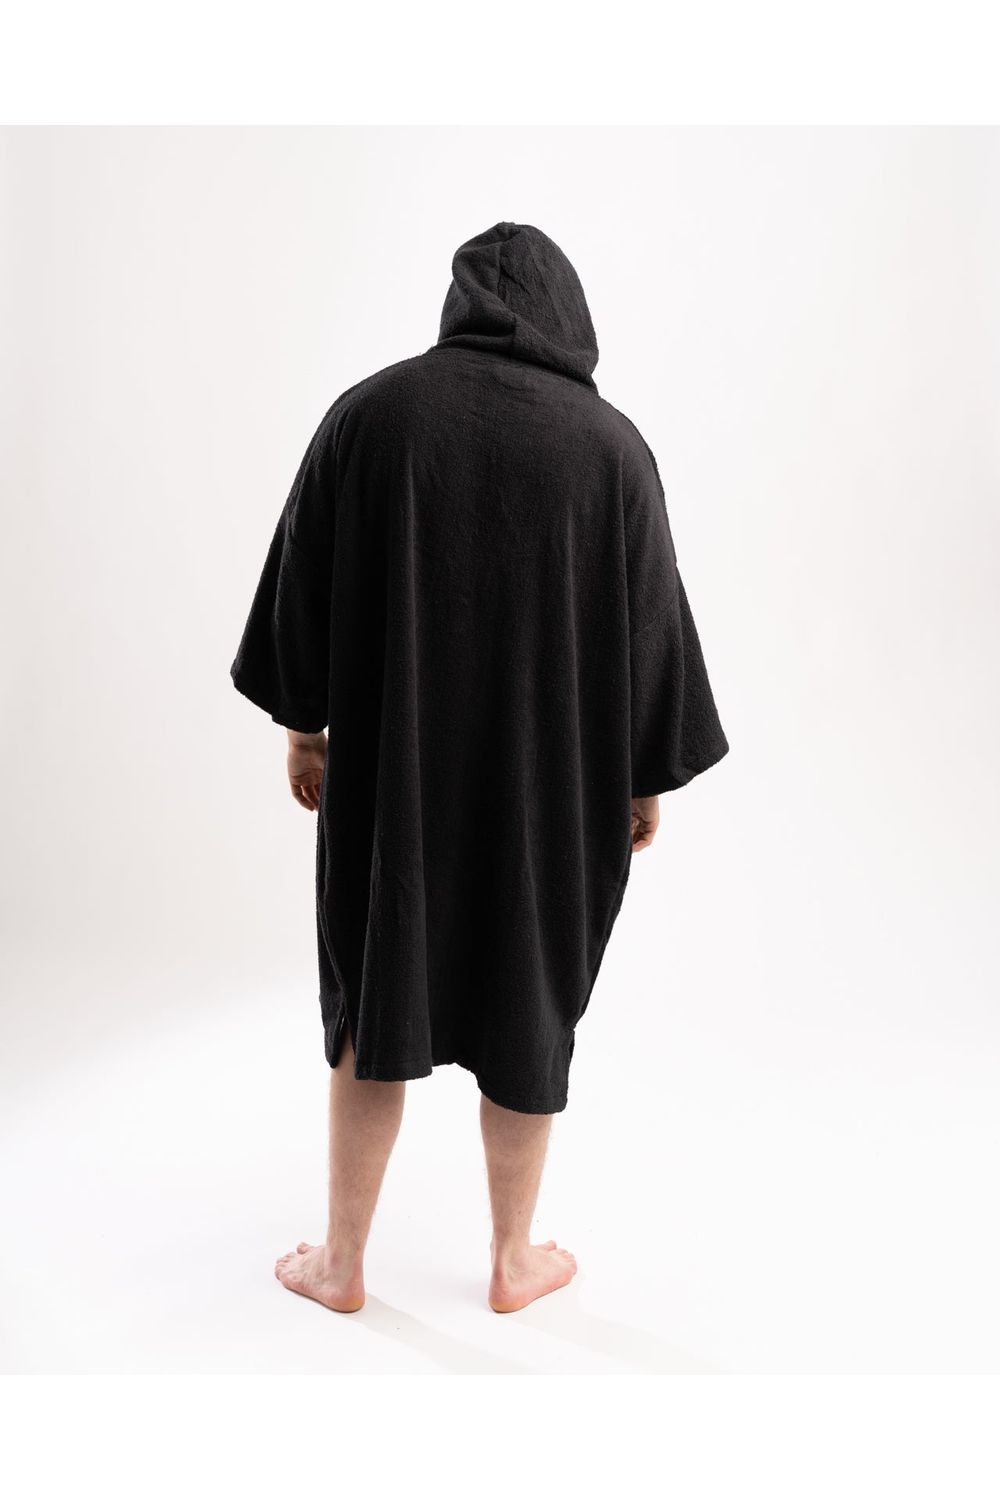 Tiki Adults Hooded Change Robe Black